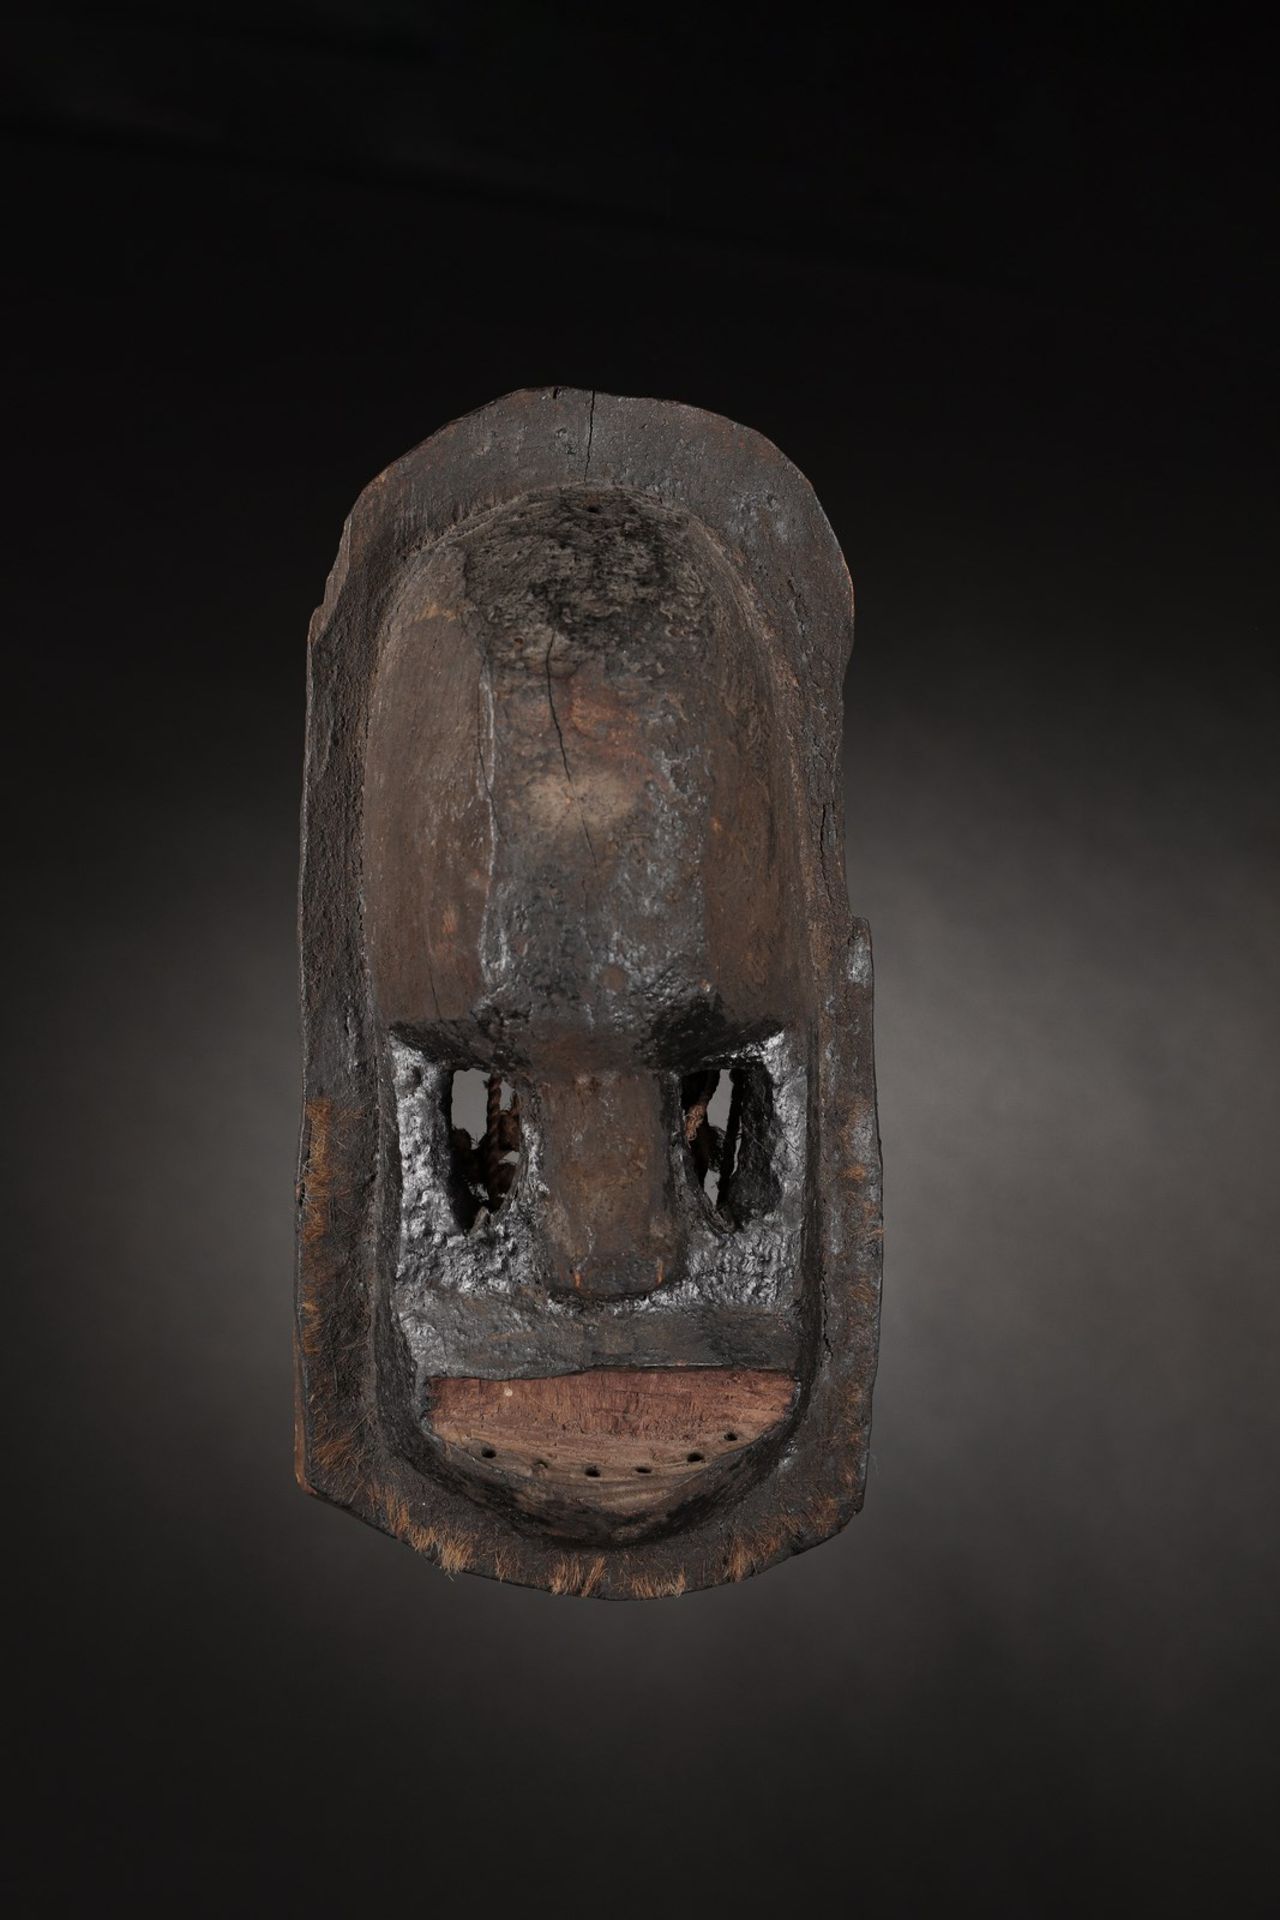 Dogon - Mali Black monkey mask.Hardwood with dark patina, bitumen and pigments, animal hair and fi